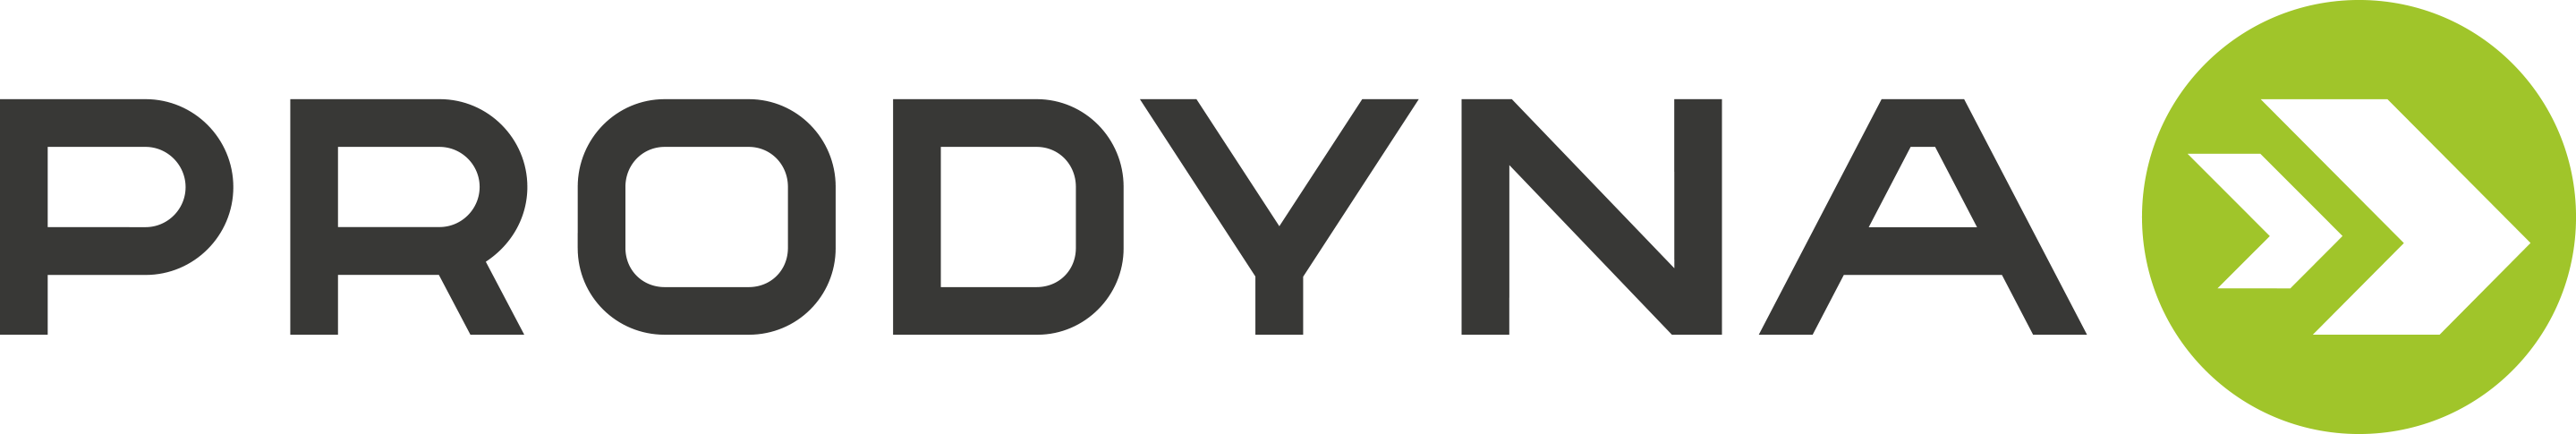 Prodyna logo